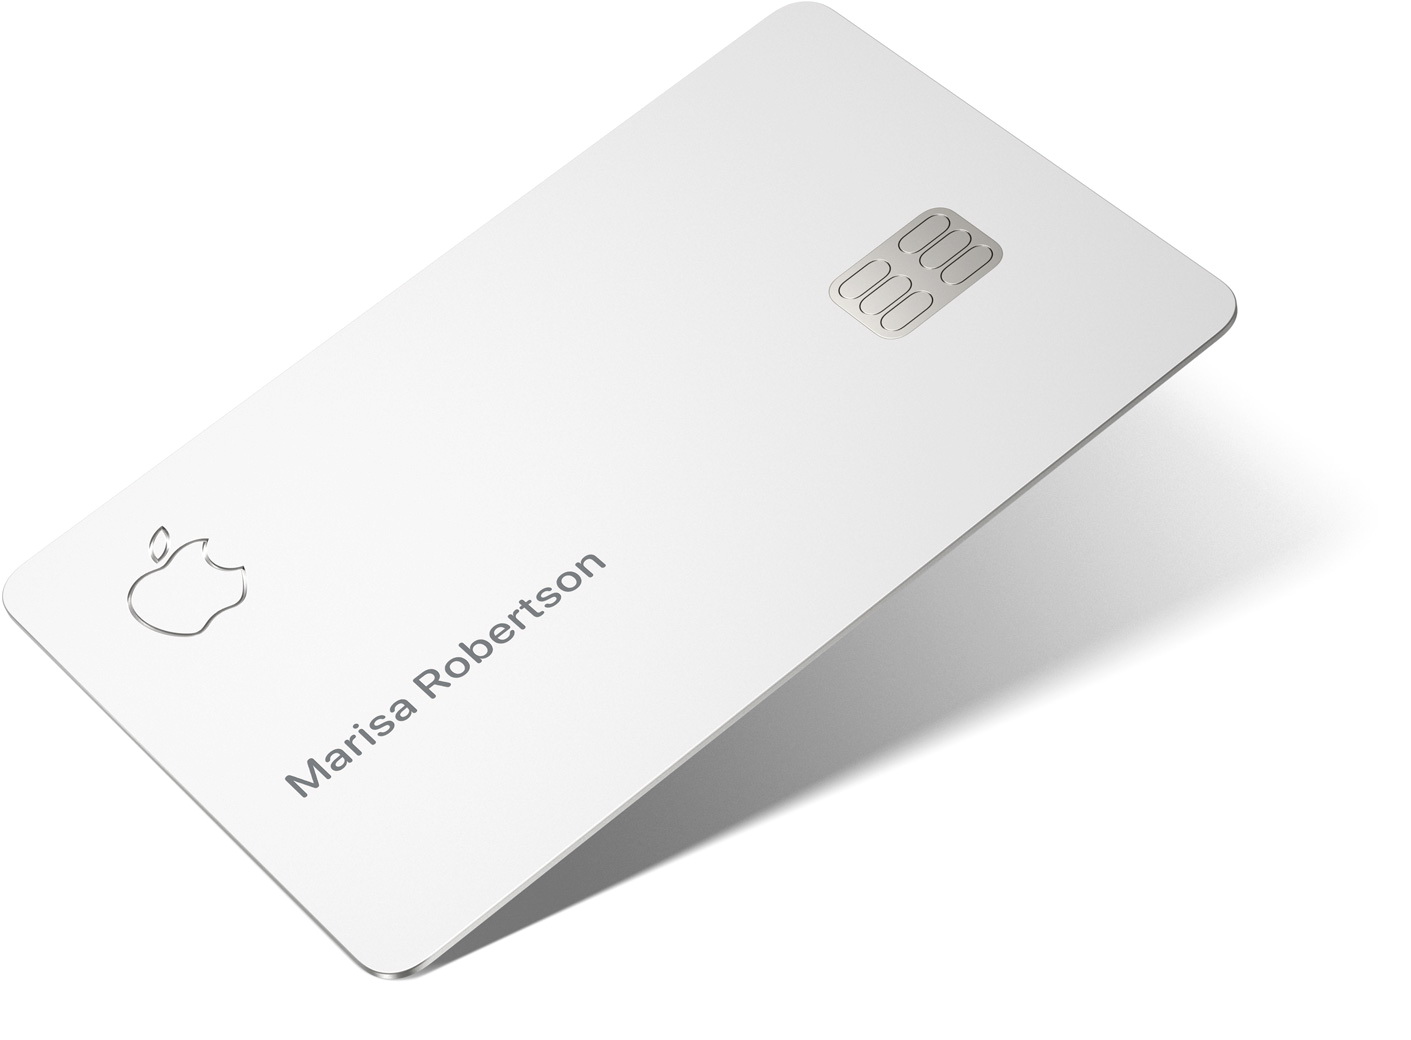 Apple Card實體卡沒有卡號， 用家只需以iPhone感應卡面，即可啟動登記。（蘋果公司圖片）